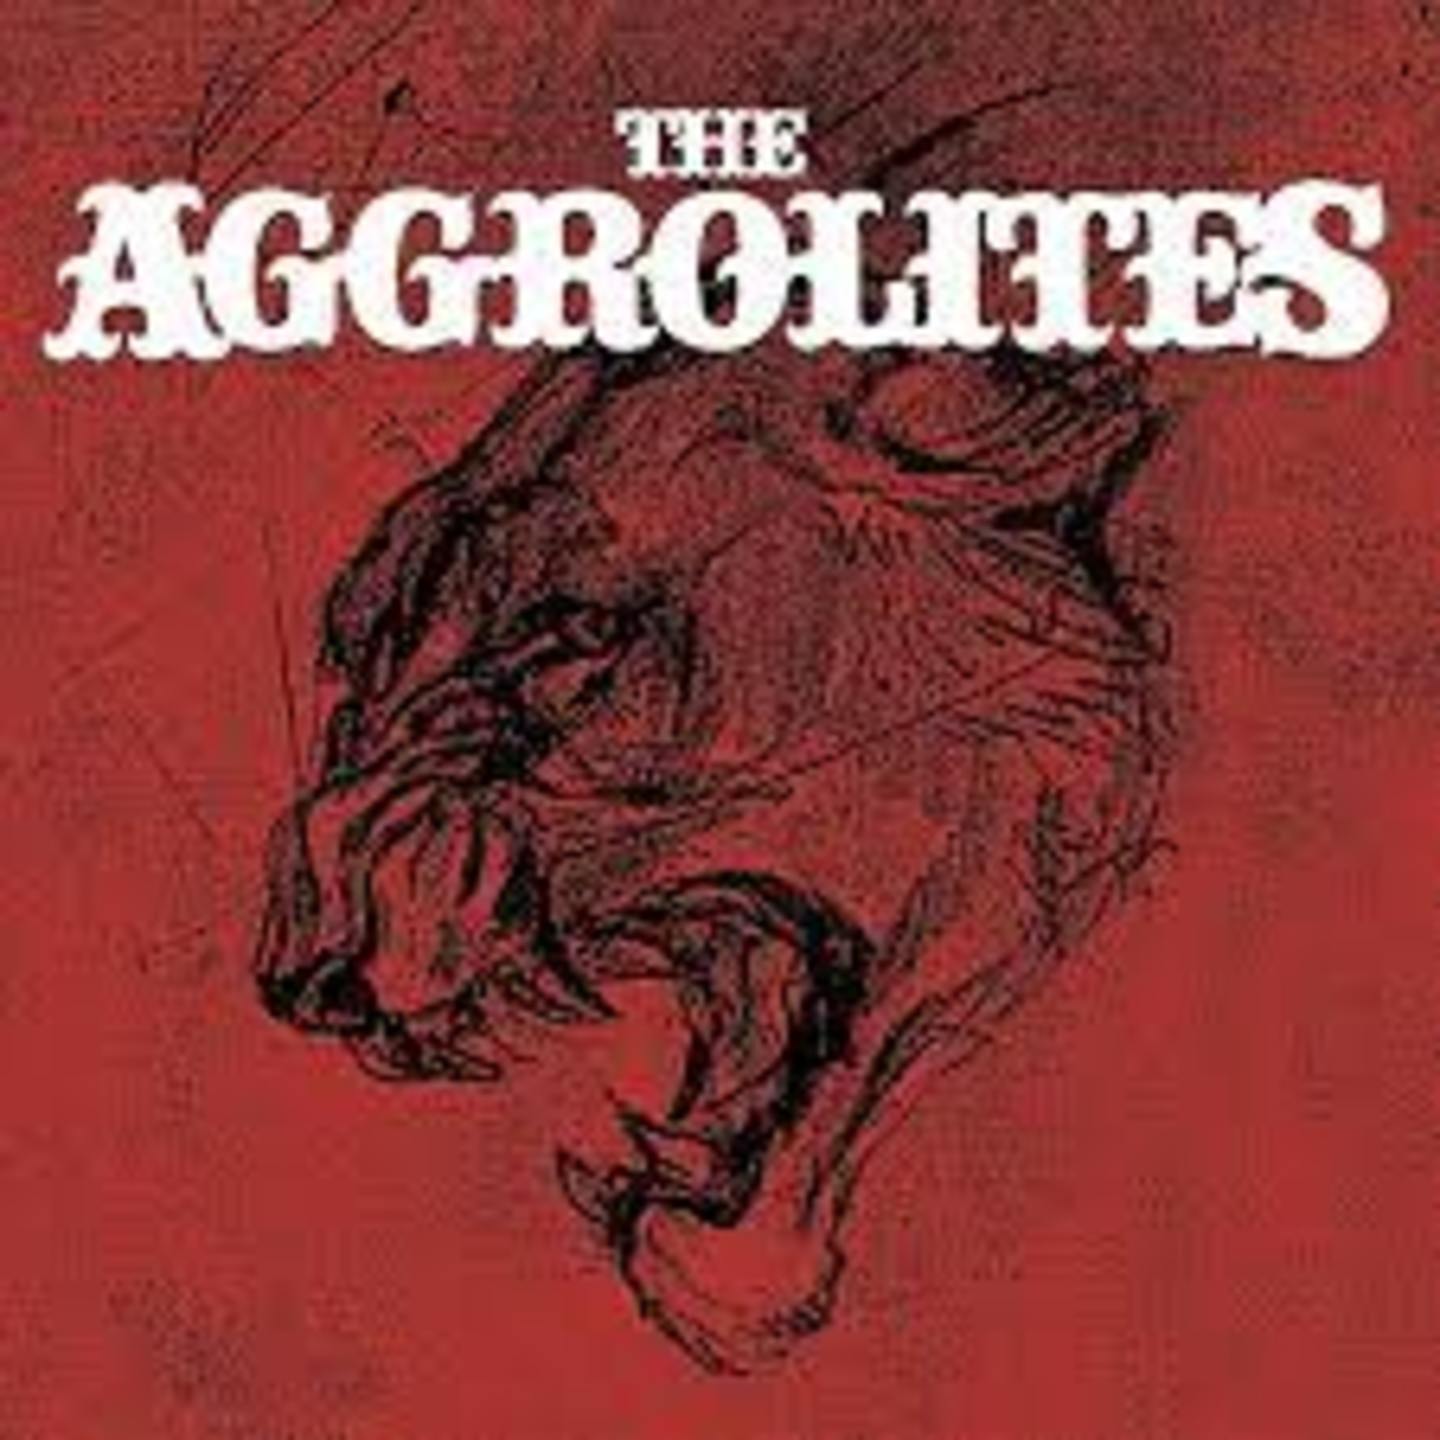 AGGROLITES, THE - Self-Titled LP